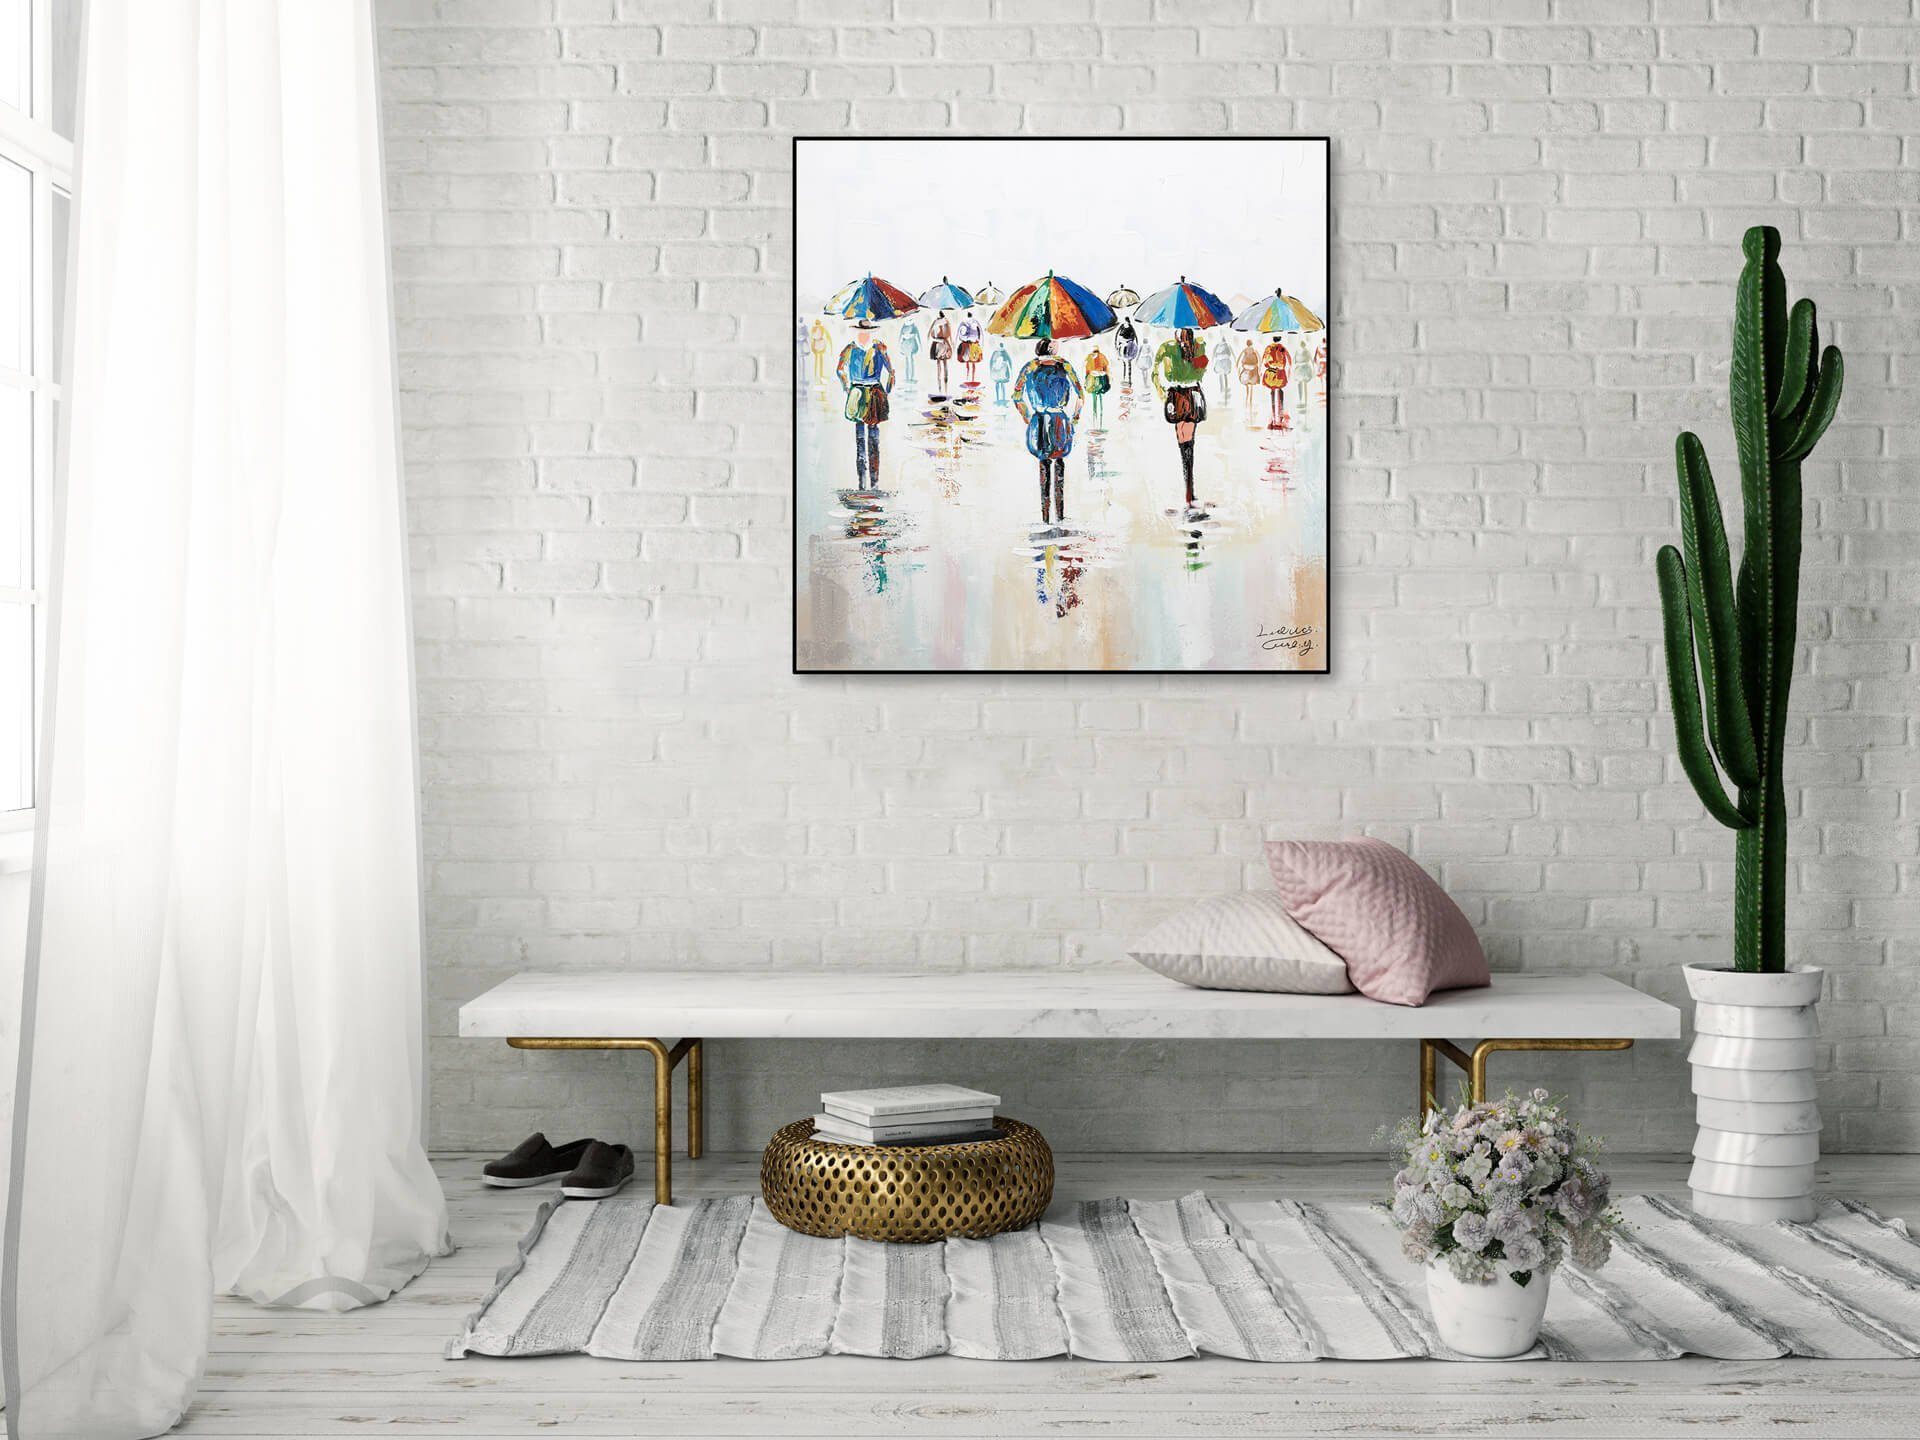 80x80 HANDGEMALT Wandbild 100% Süße KUNSTLOFT cm, Gemälde Wohnzimmer Regengüsse Leinwandbild